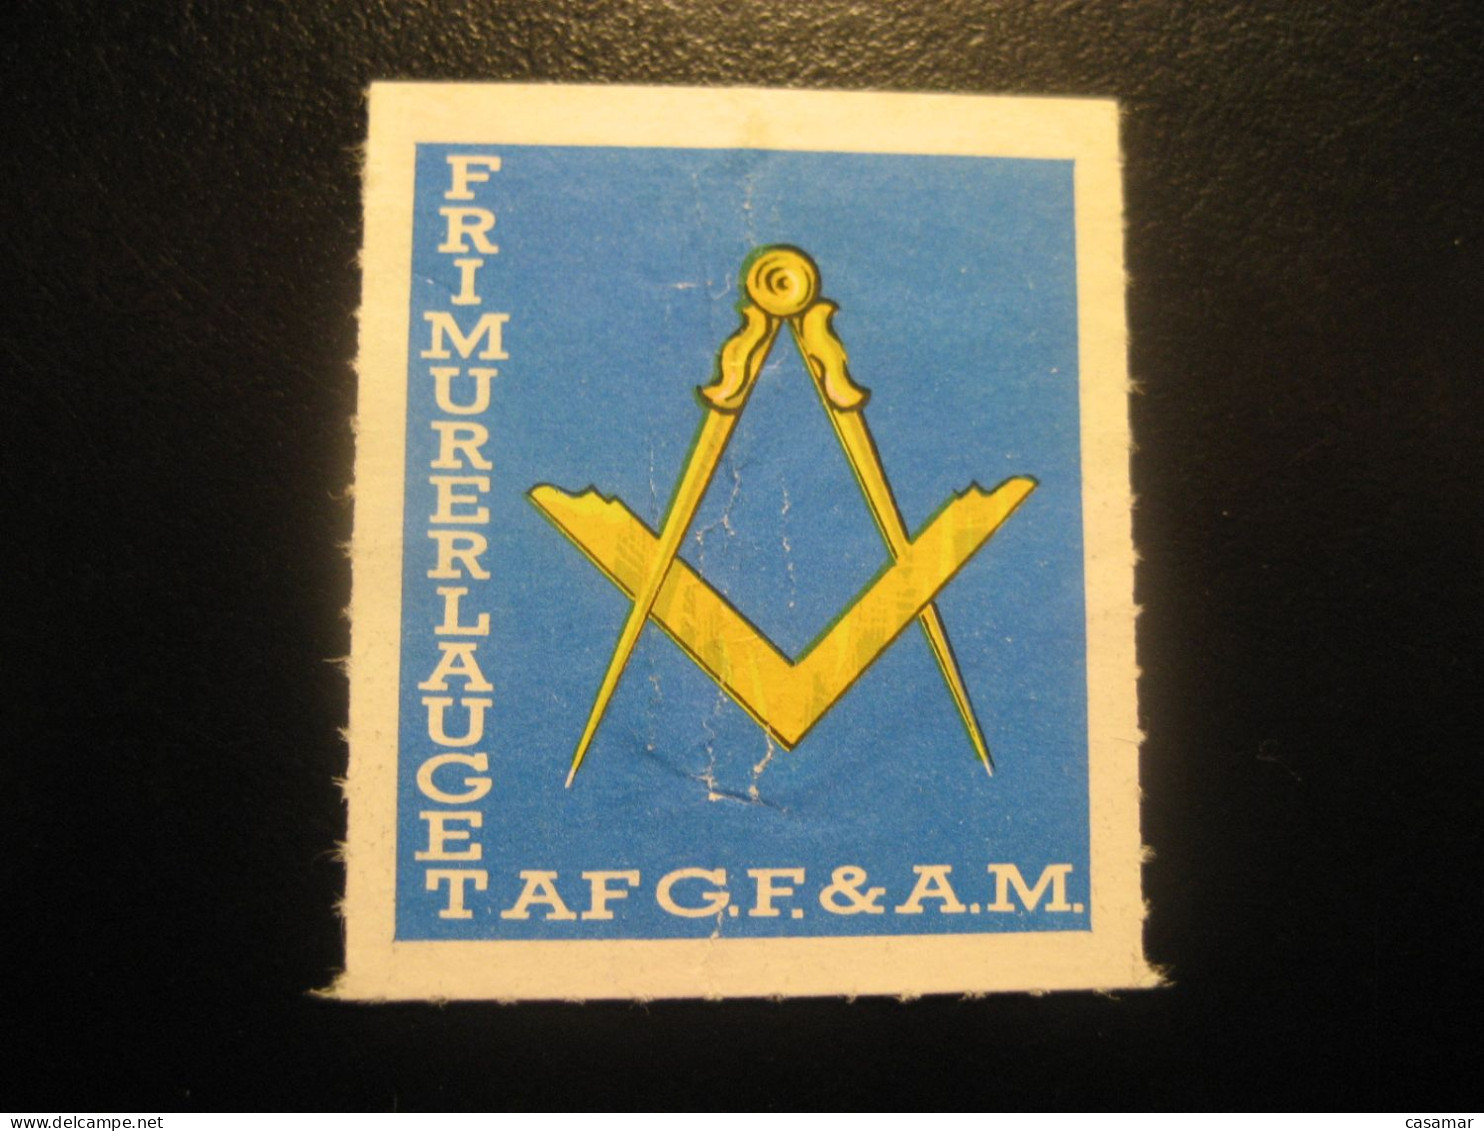 Frimurerlauget AF G.F. & A.M. Freemasonry Masonry Masonic Lodge Perces Zig Zag Poster Stamp Vignette DENMARK Label - Vrijmetselarij